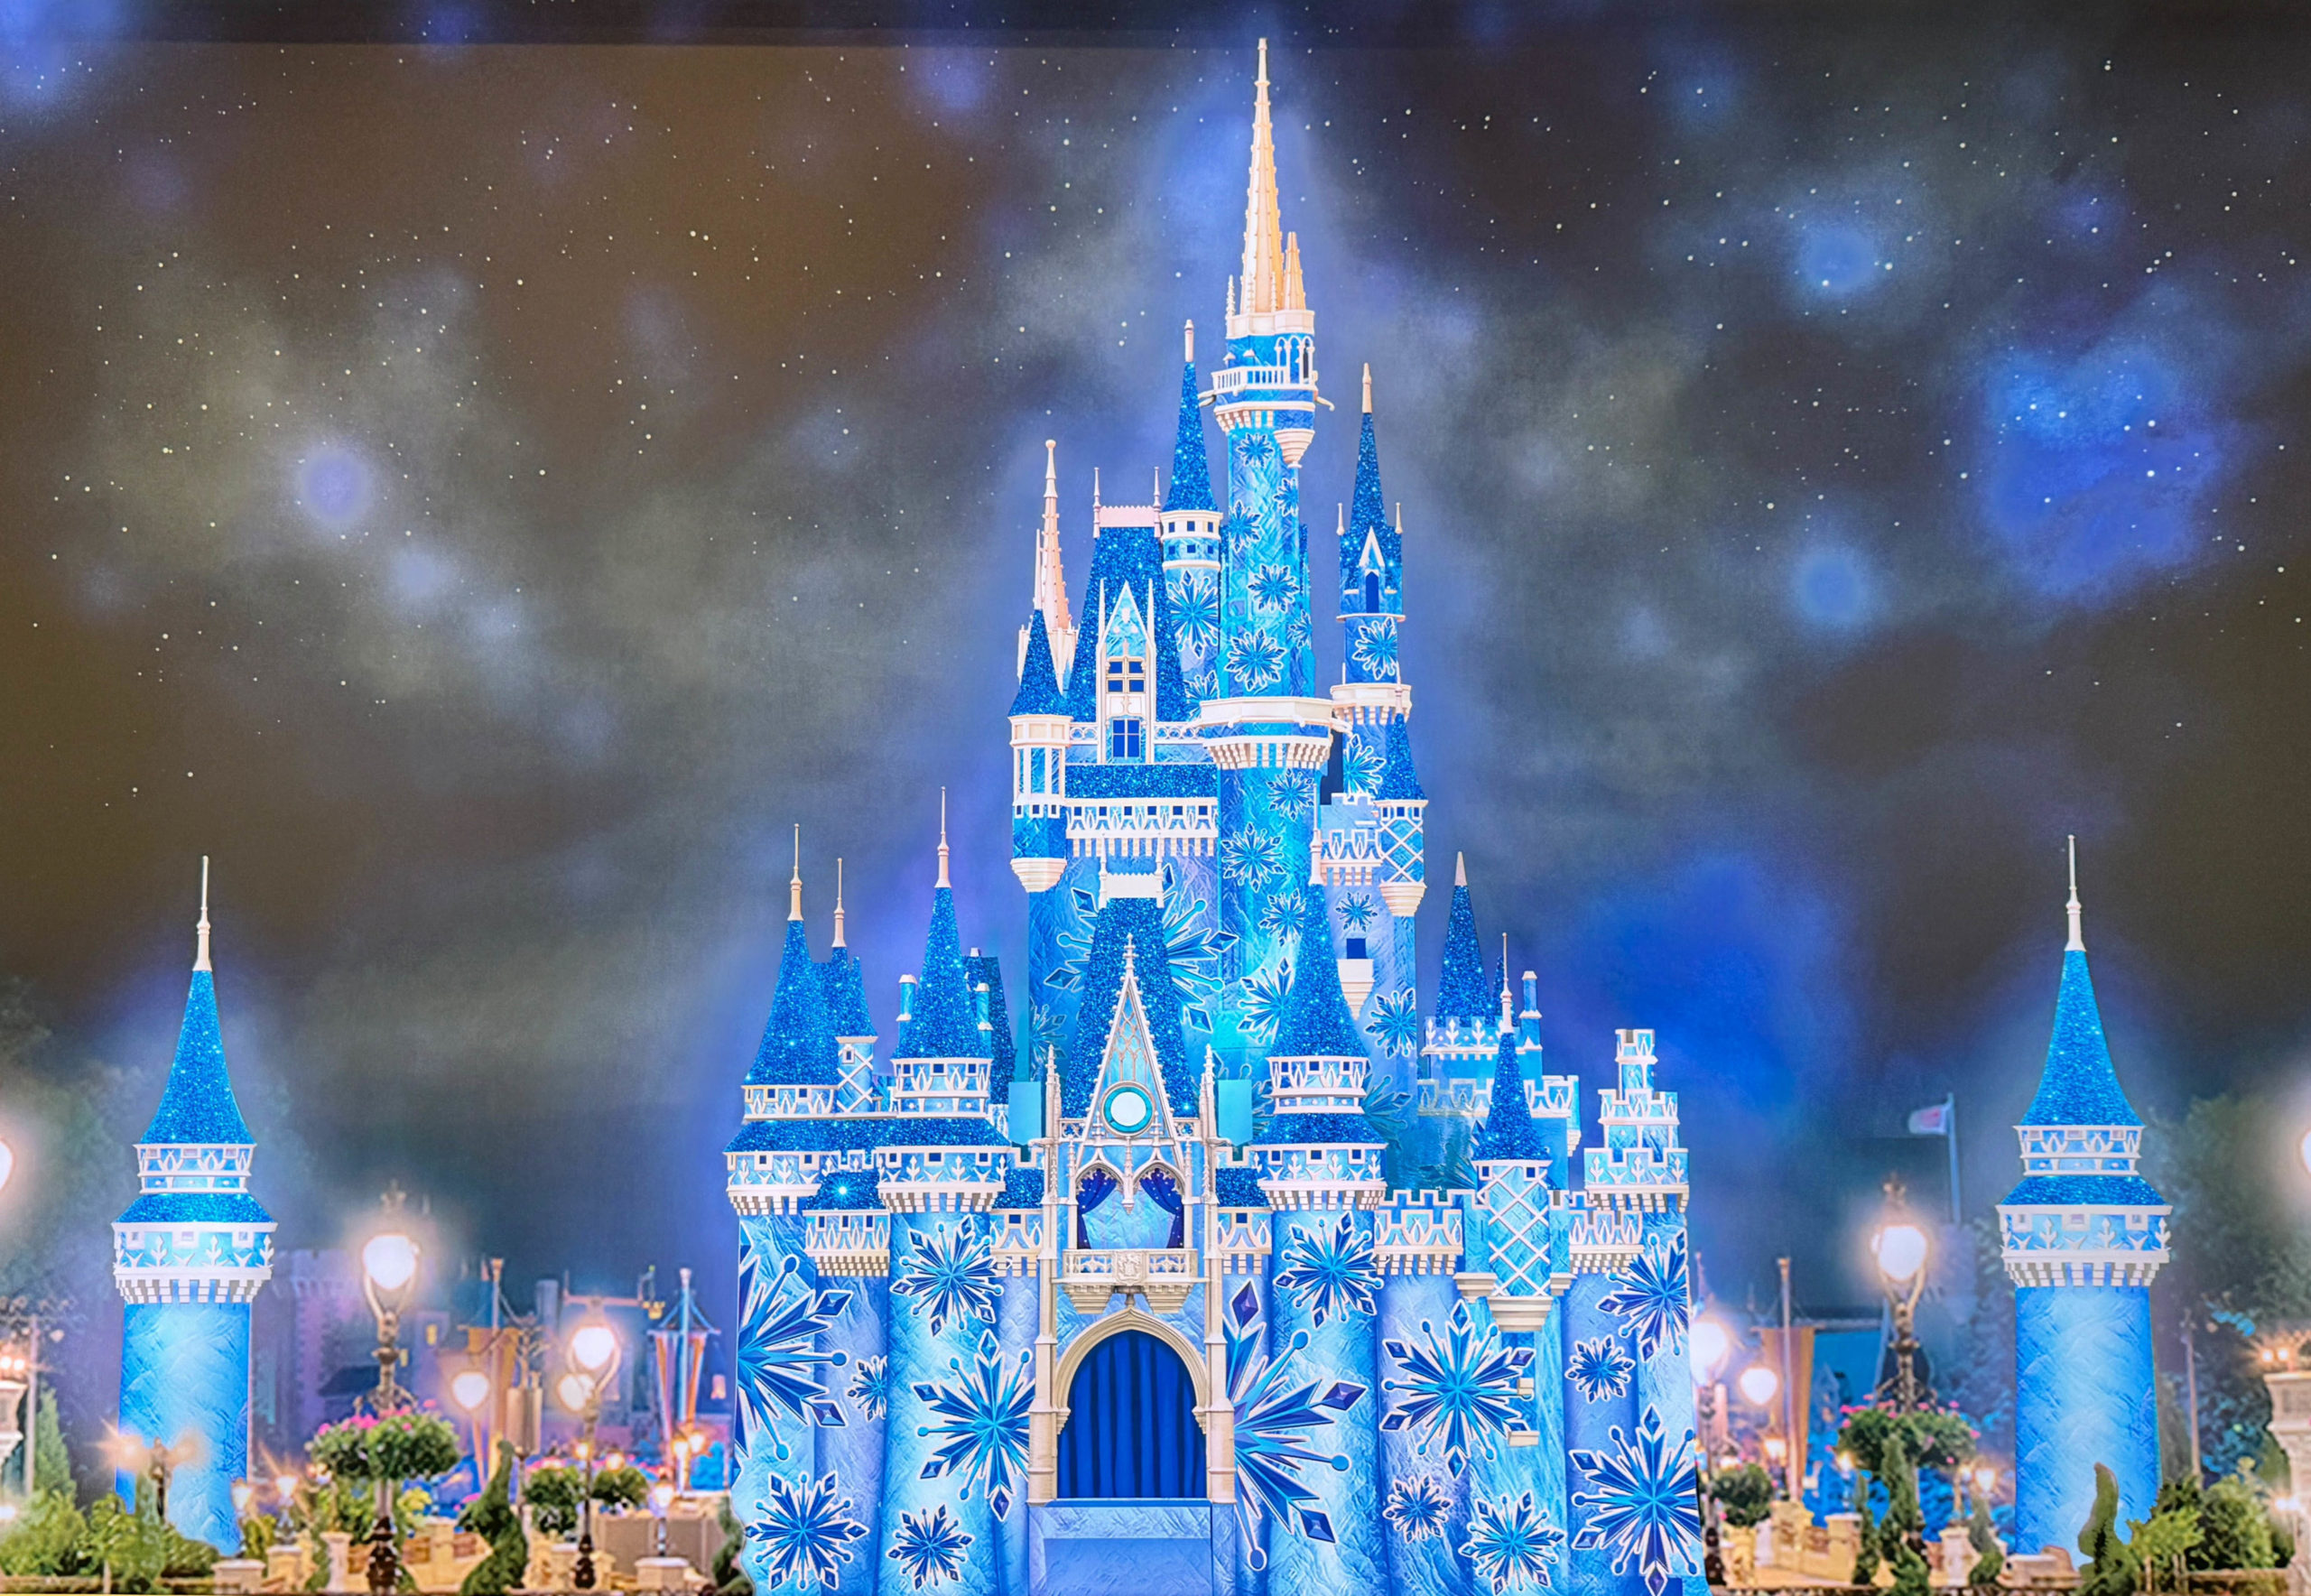 Cinderella Castle wall art in DisneyStyle